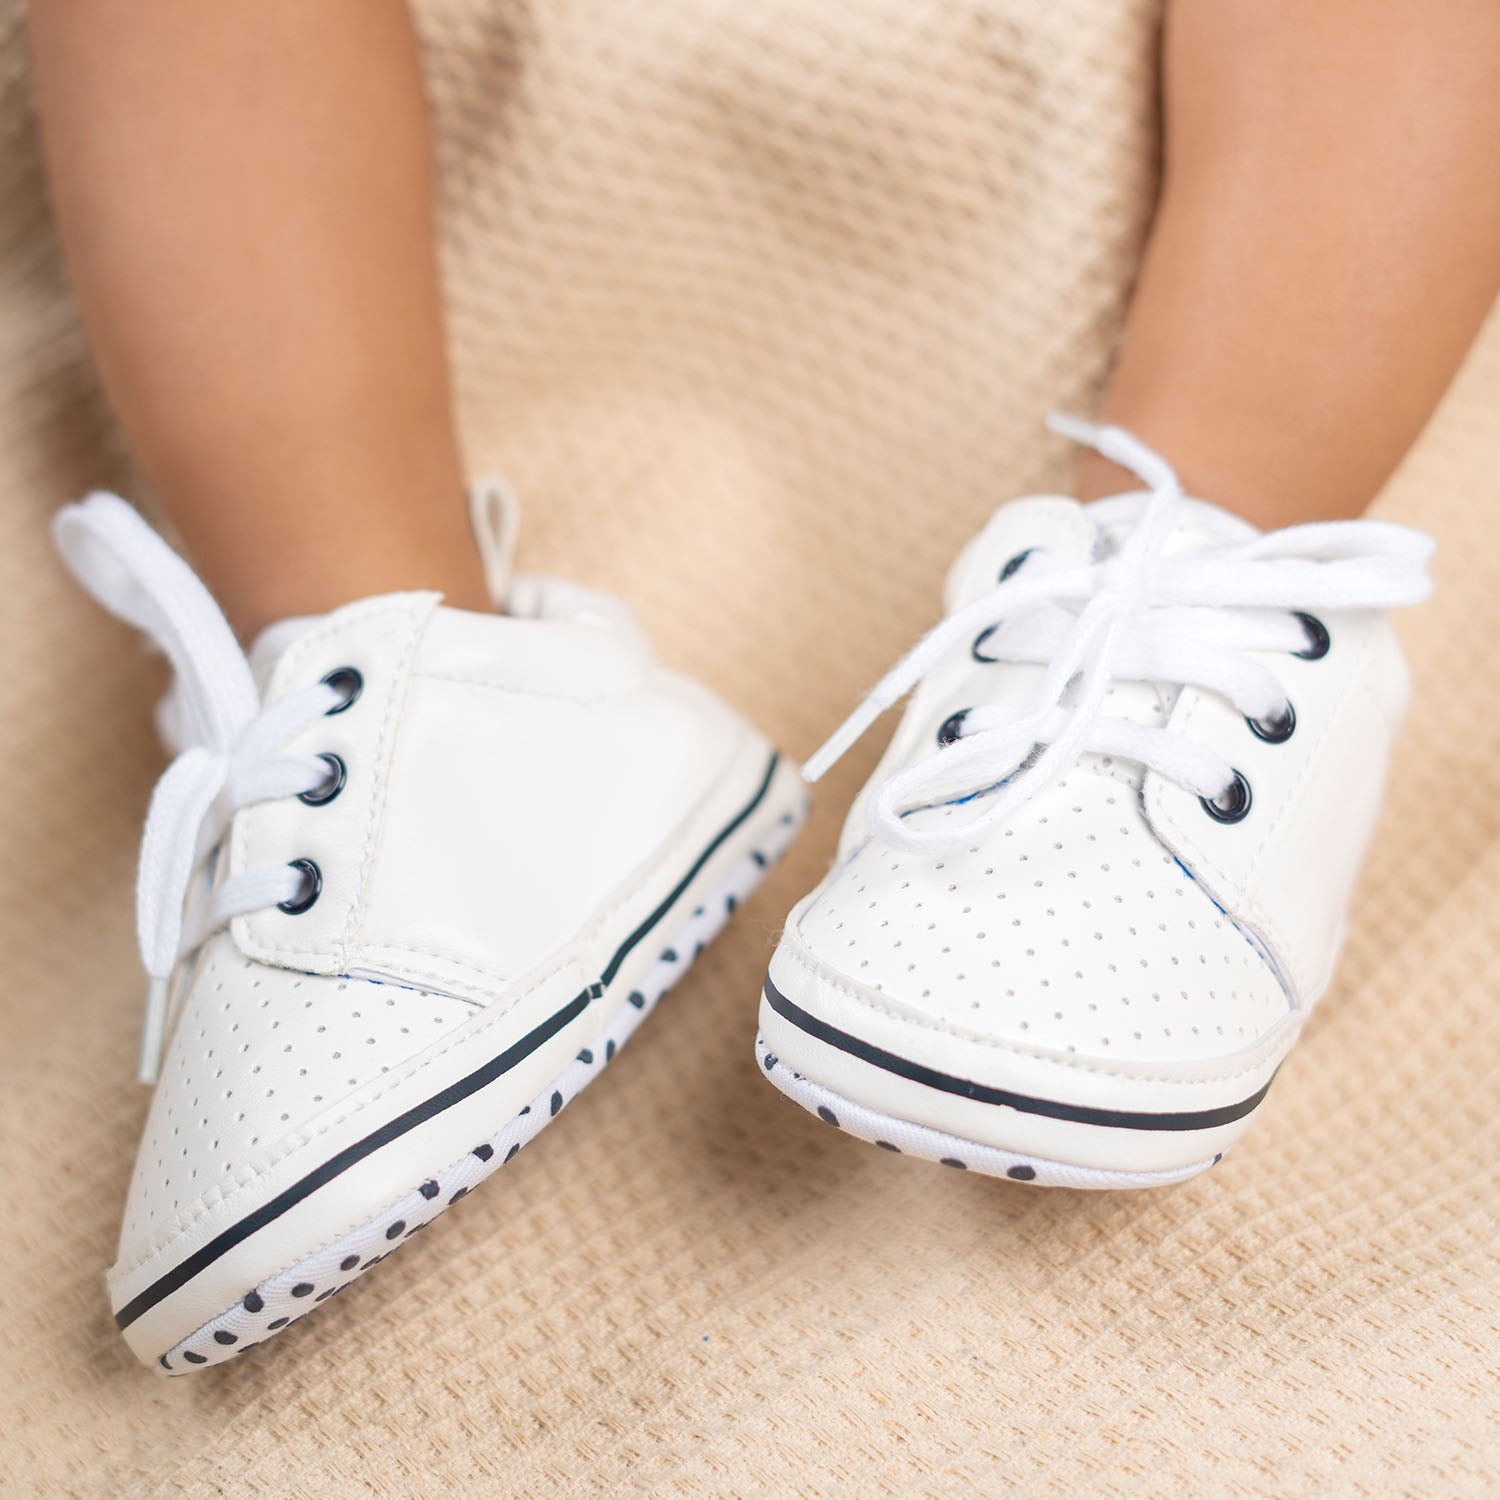 Baby Sandals, Kids Booties u0026 Infant Footwear Buy Online Now